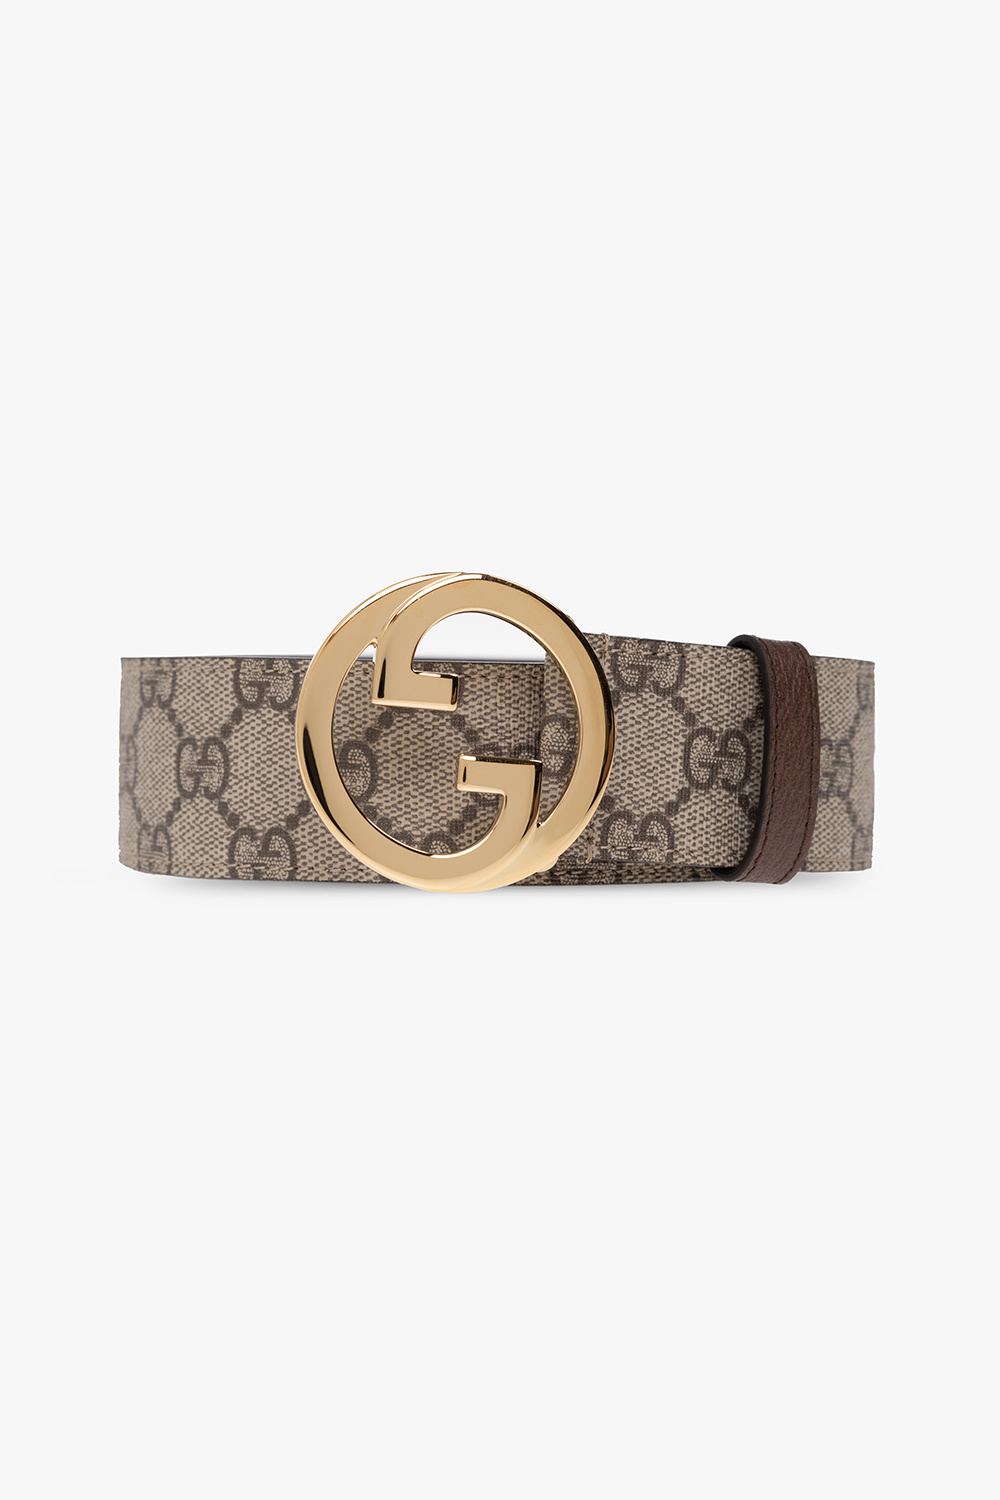 Gucci Womens Belts in Women's Accessories 